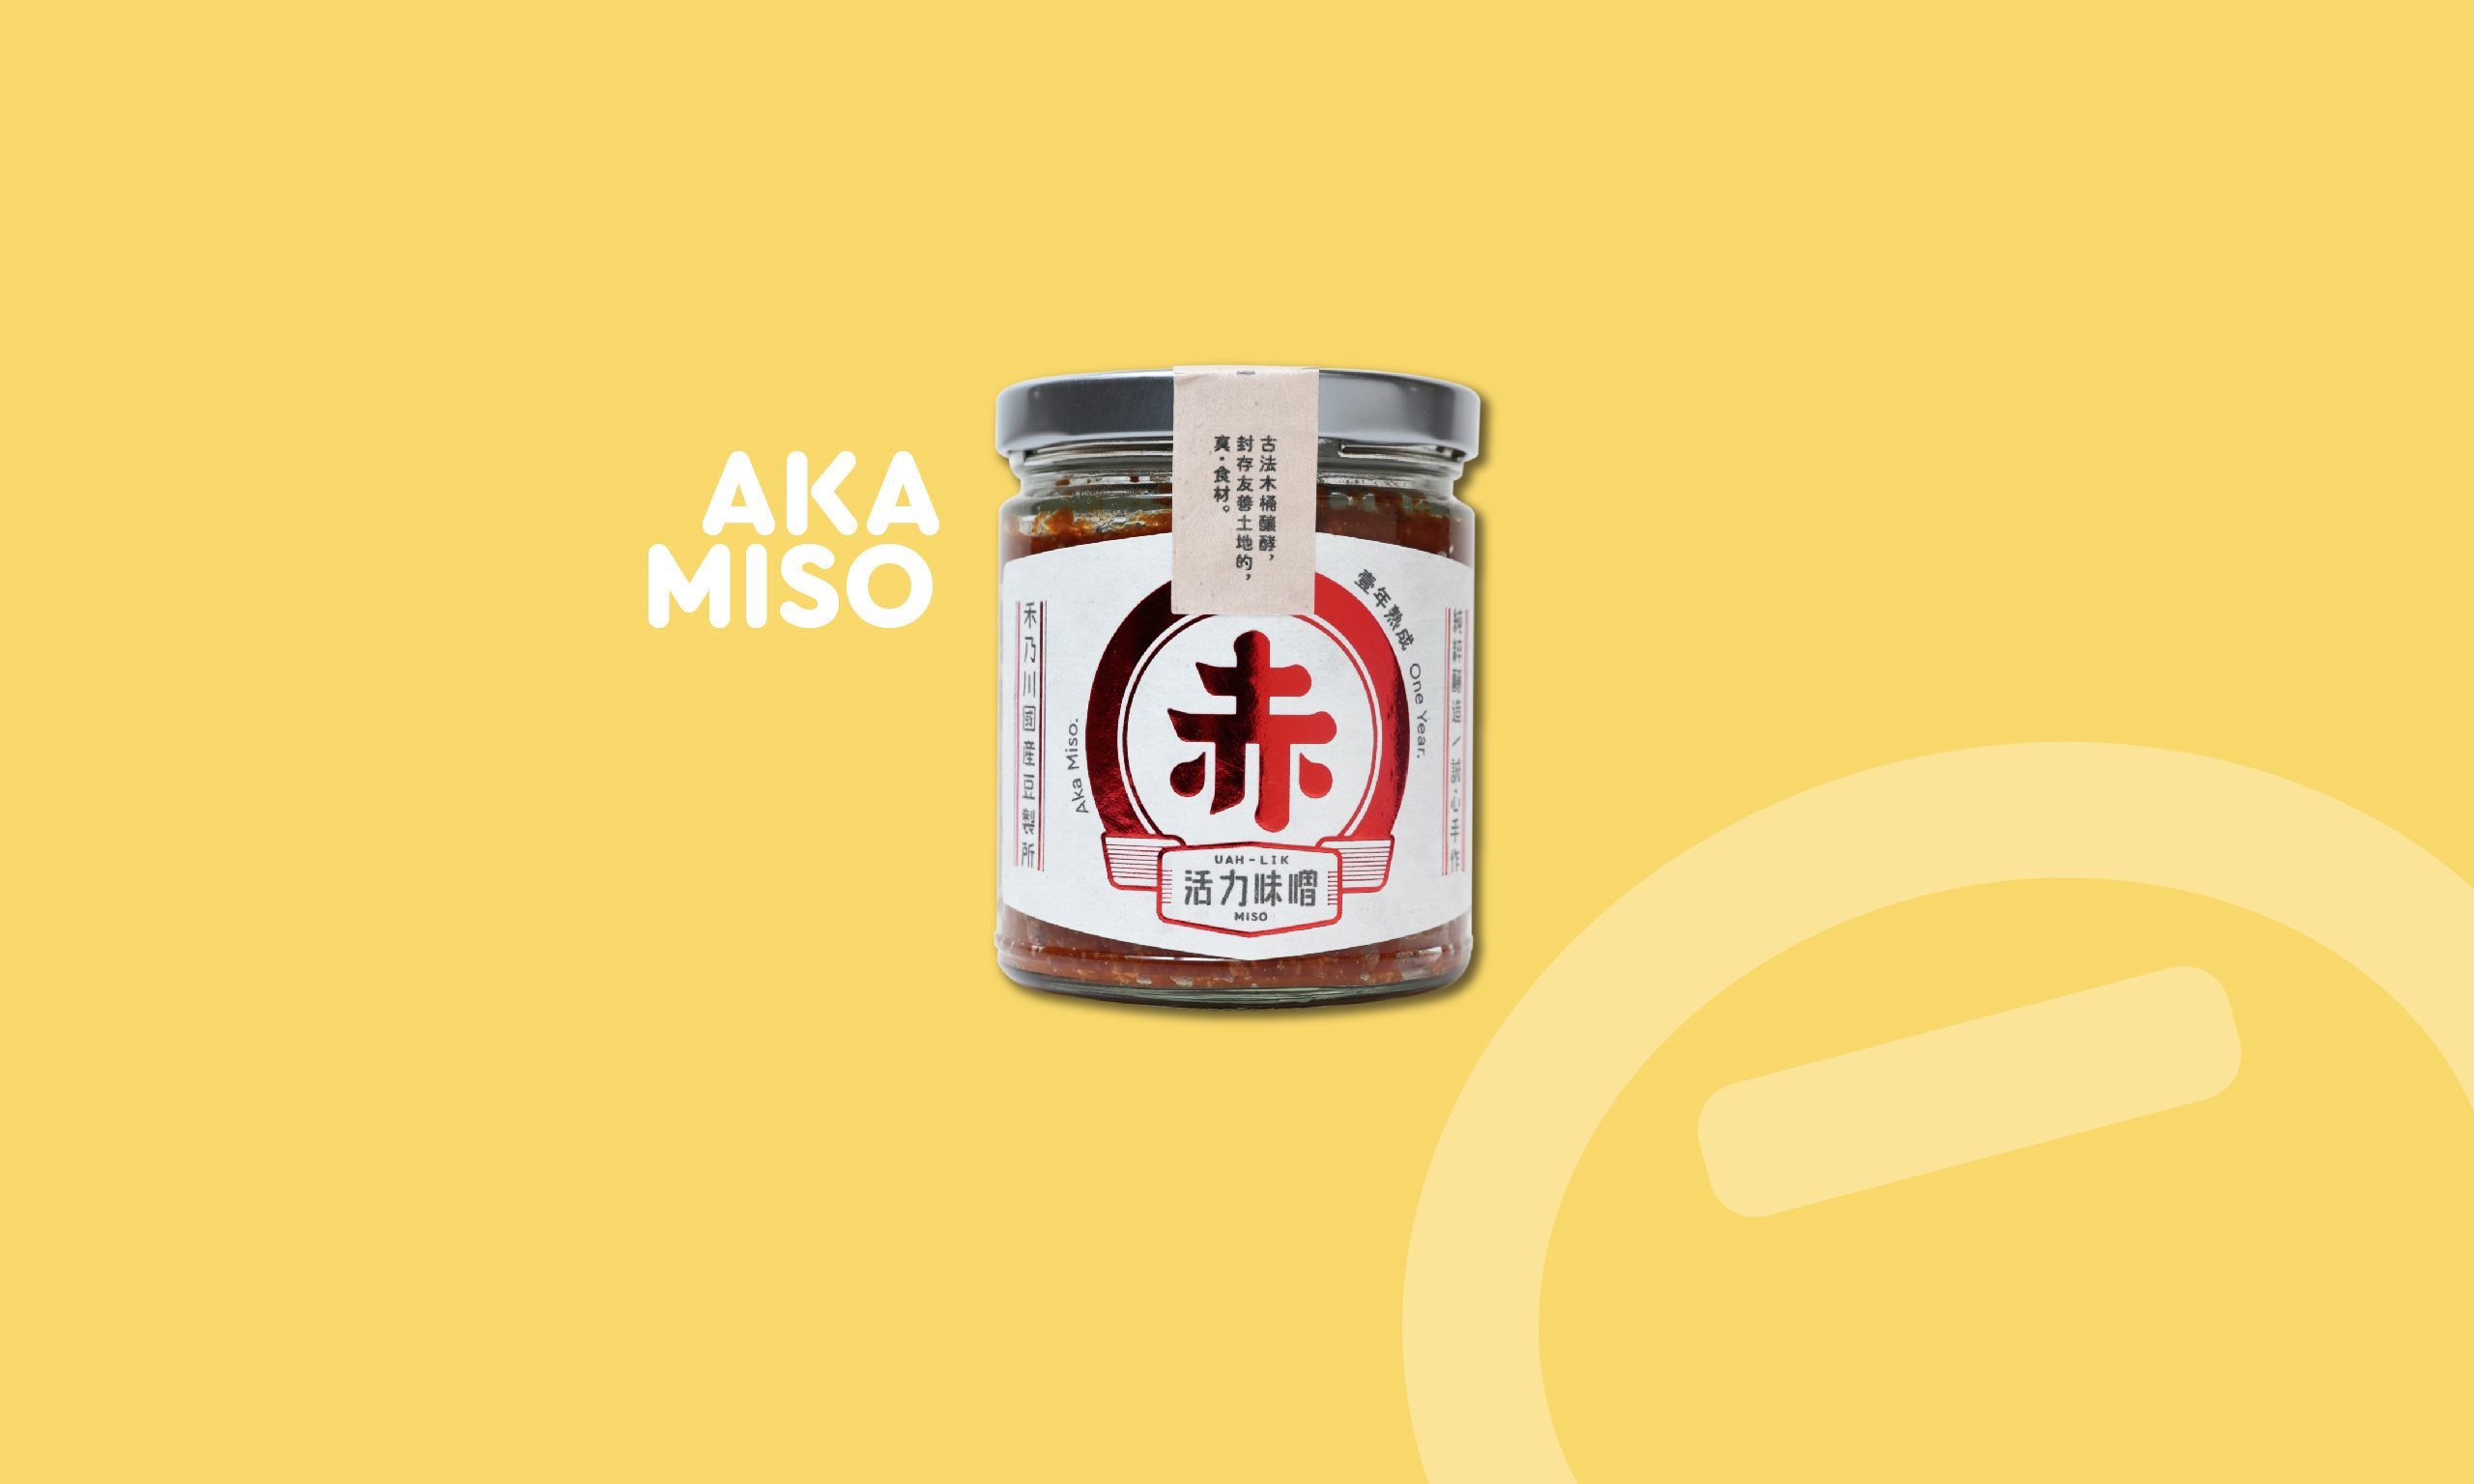 Aka Miso (12 Months Aged) - Taiwan handmade natural Miso sauce with organic rice